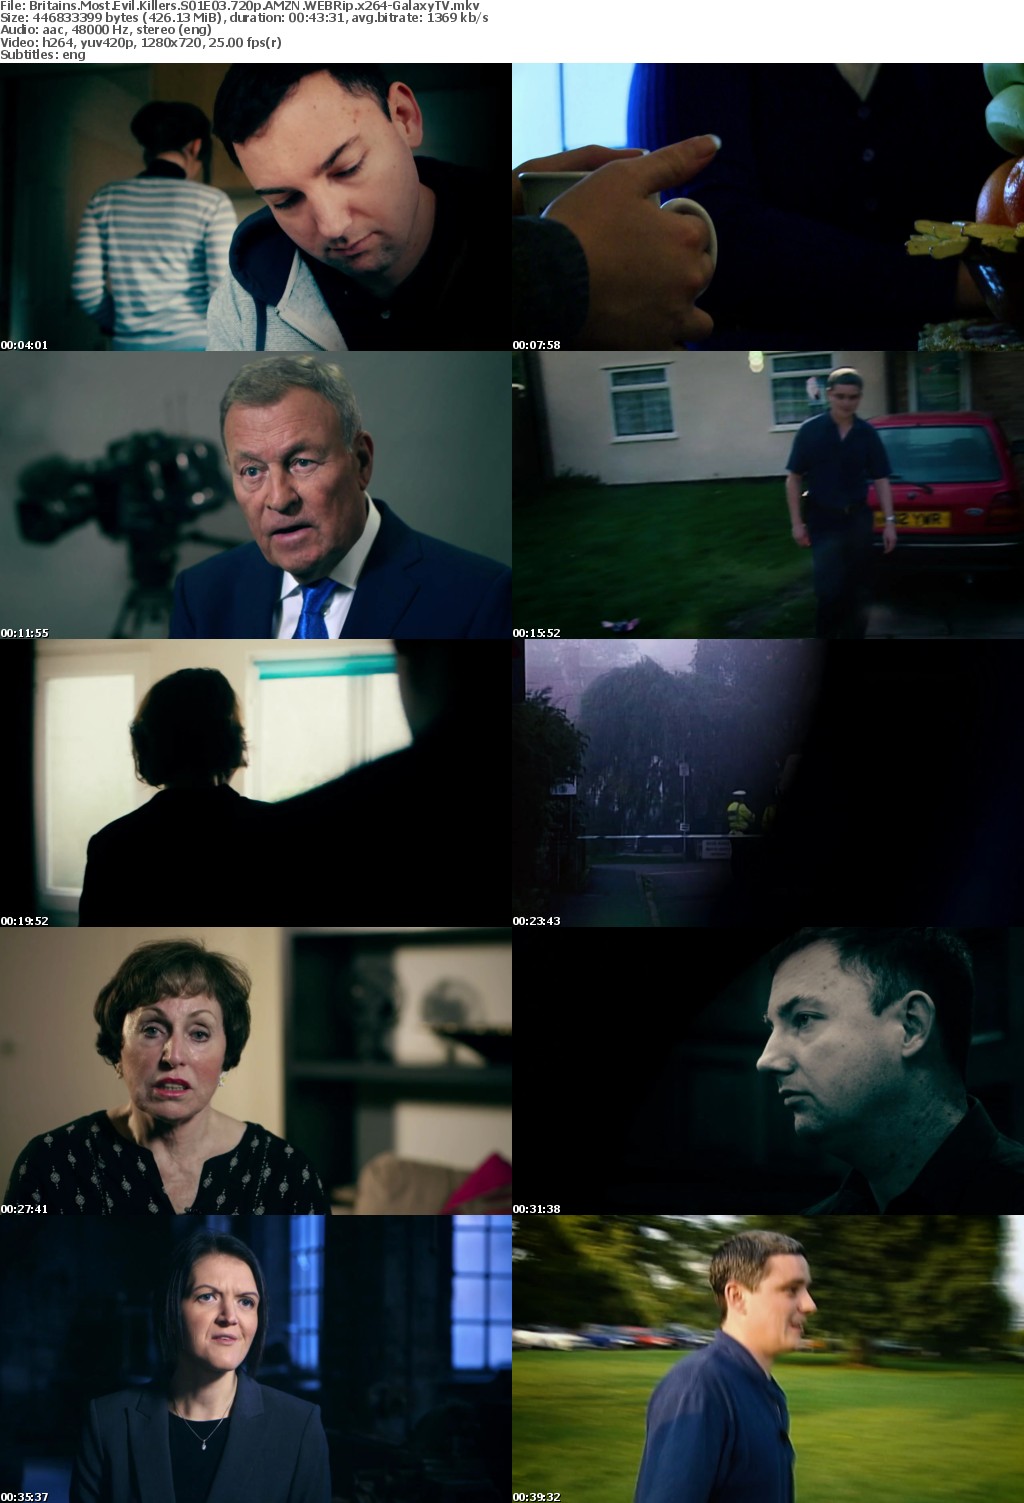 Britains Most Evil Killers S01 COMPLETE 720p AMZN WEBRip x264-GalaxyTV